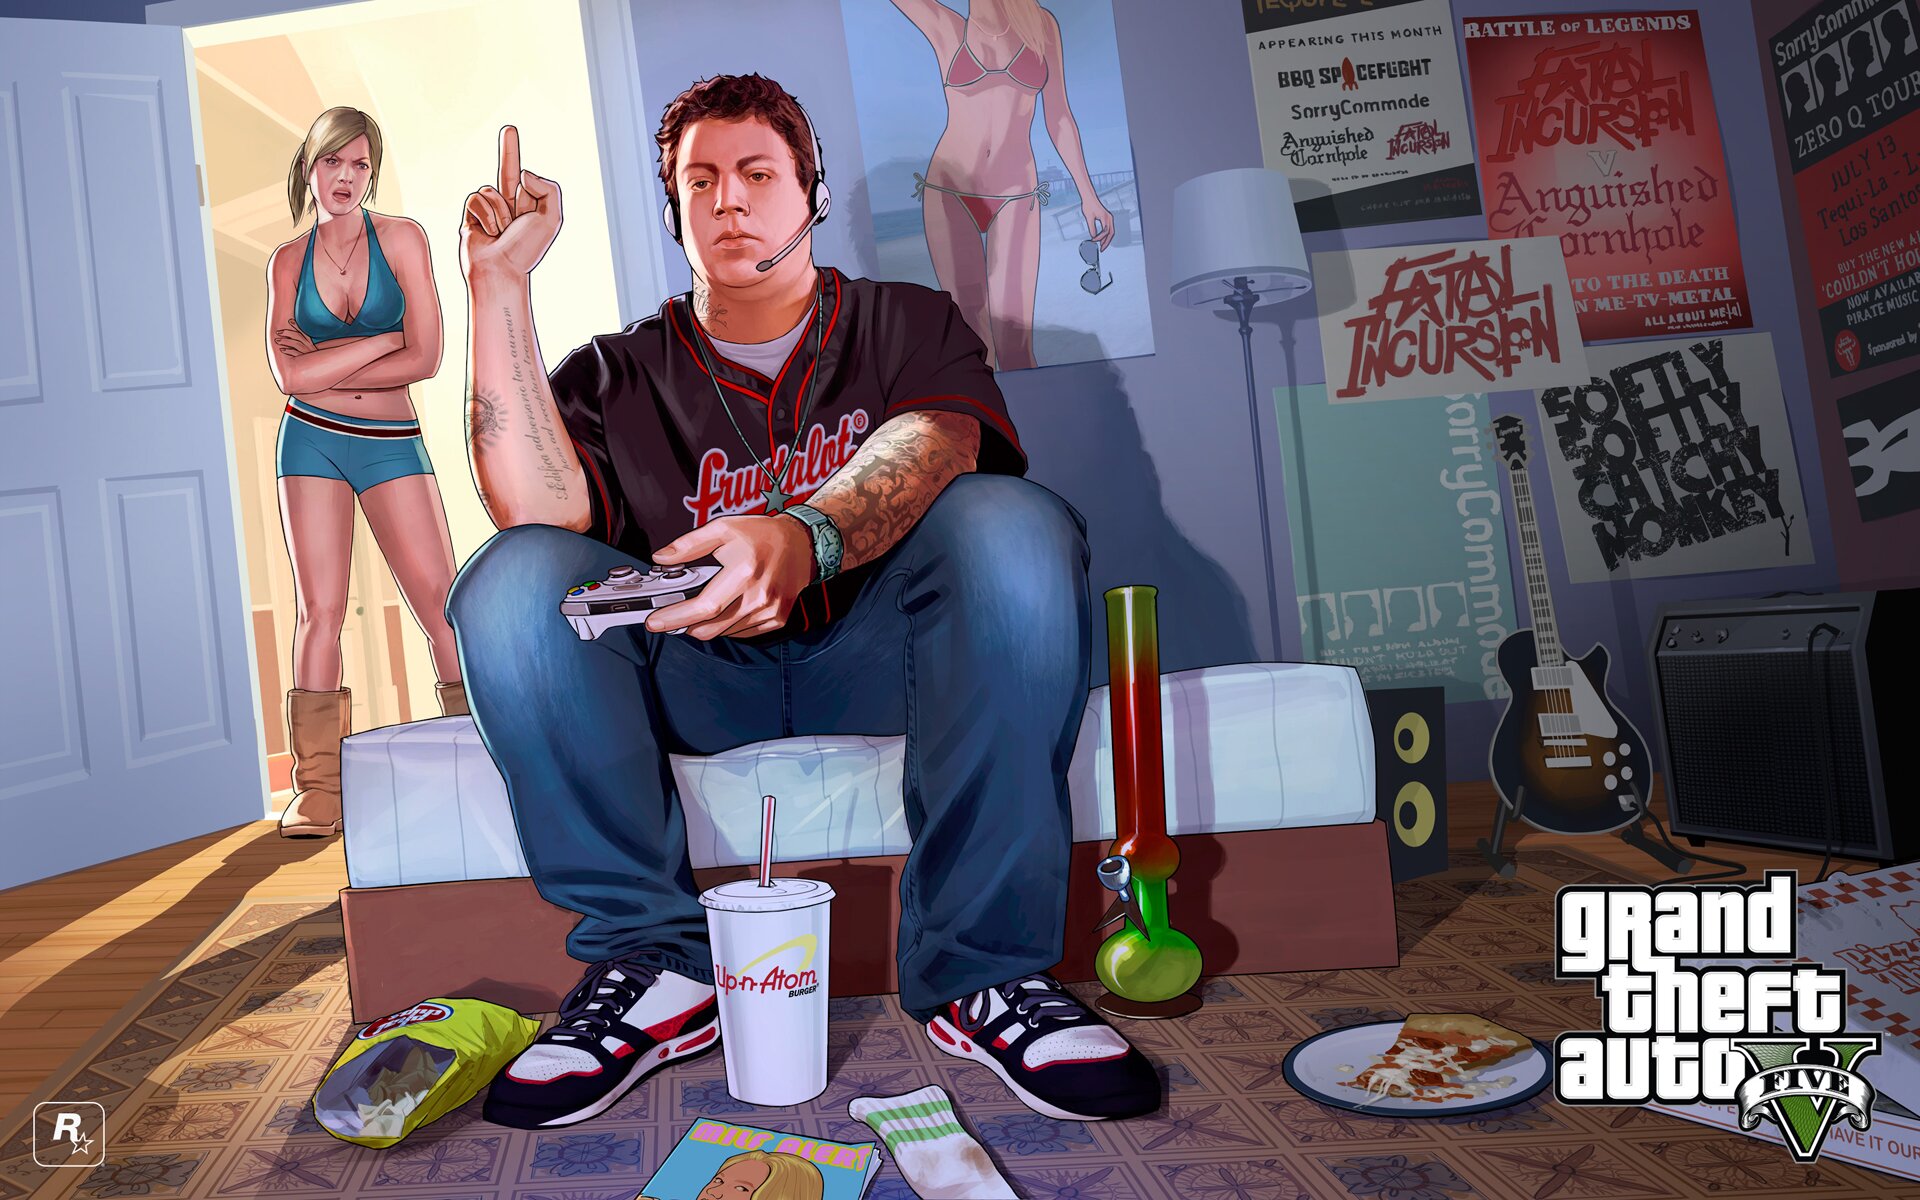 Grand Theft Auto V, Wallpaper,exquisite